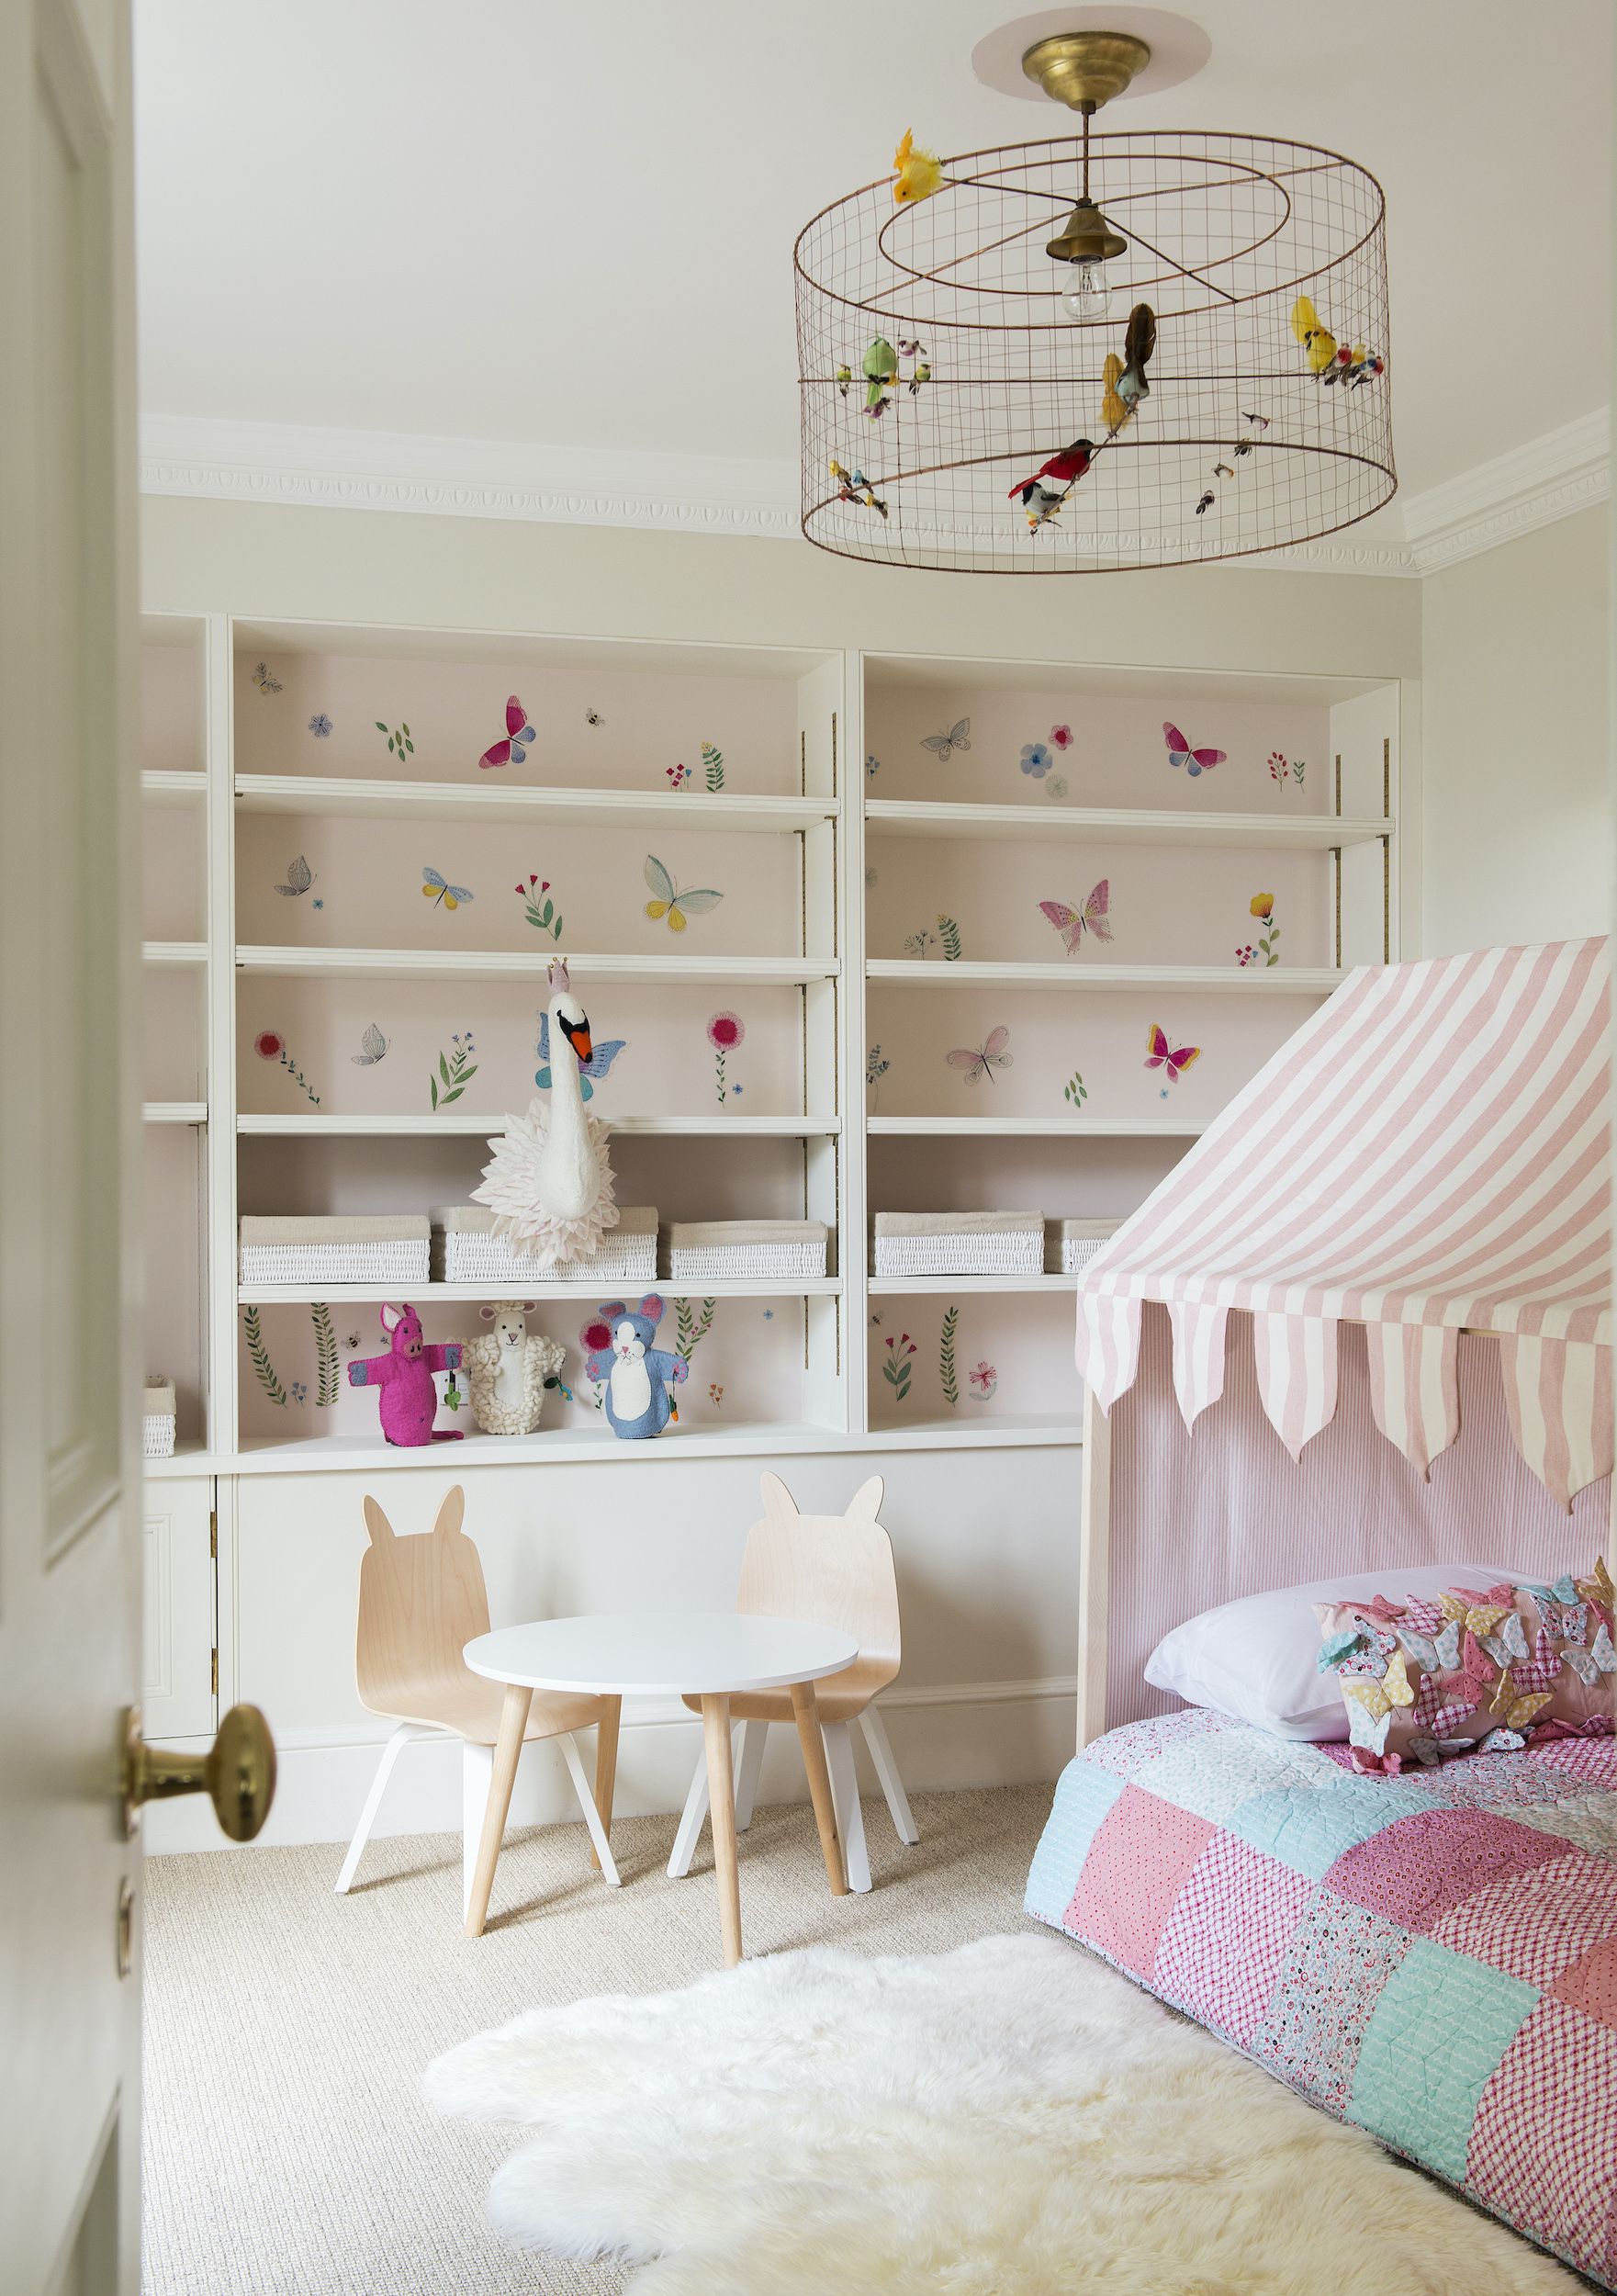 girls' bedroom ideas for 2021 - girls bedroom decor